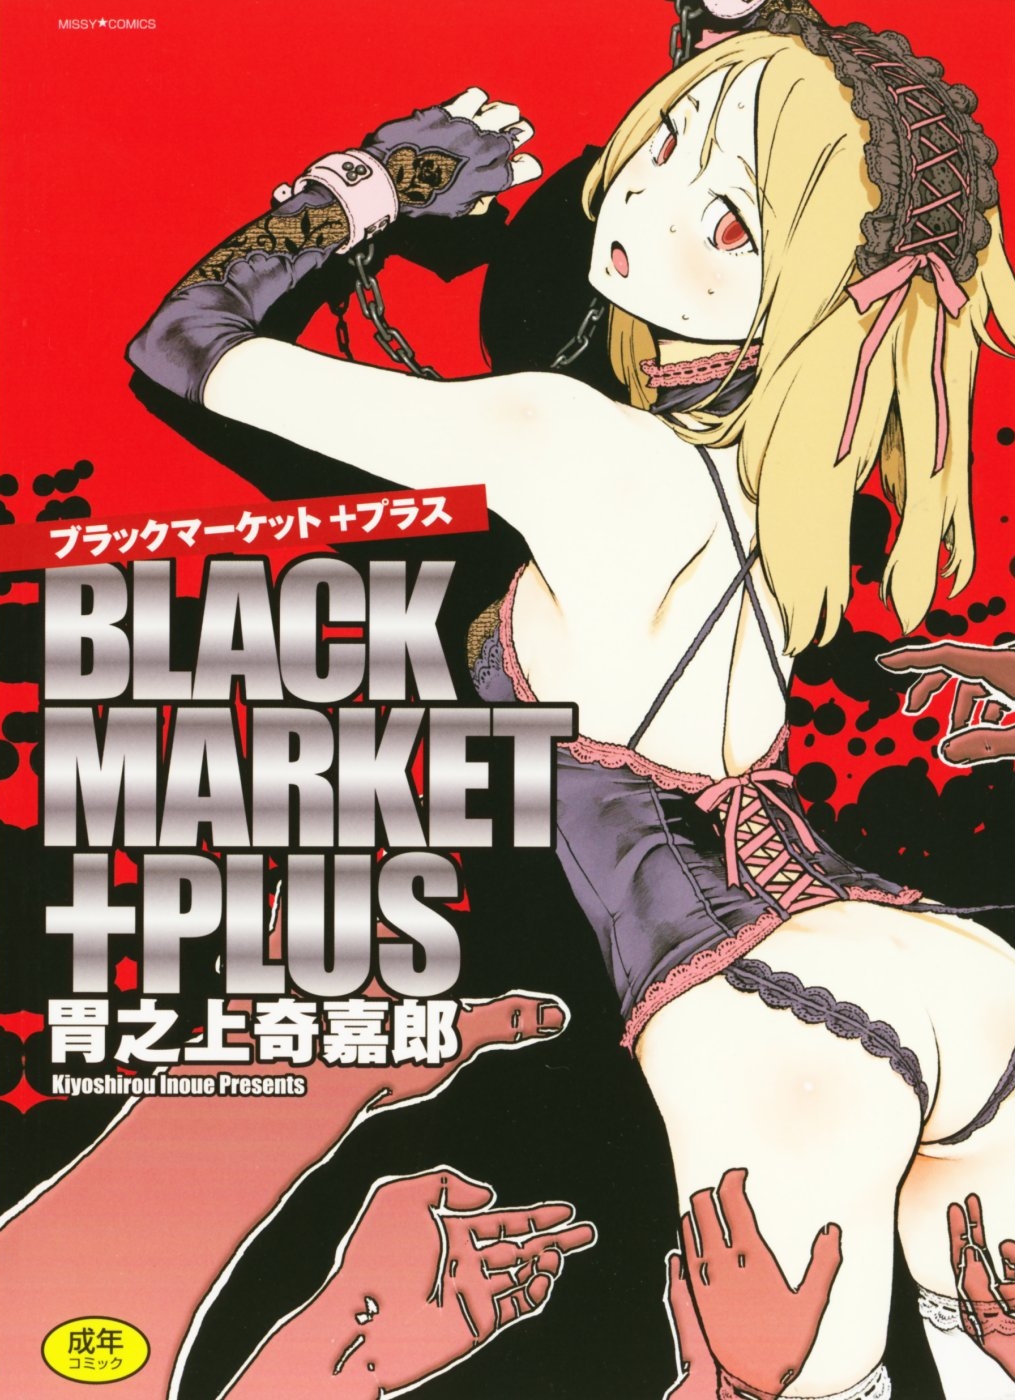 [Inoue Kiyoshirou] Black Market +Plus page 1 full